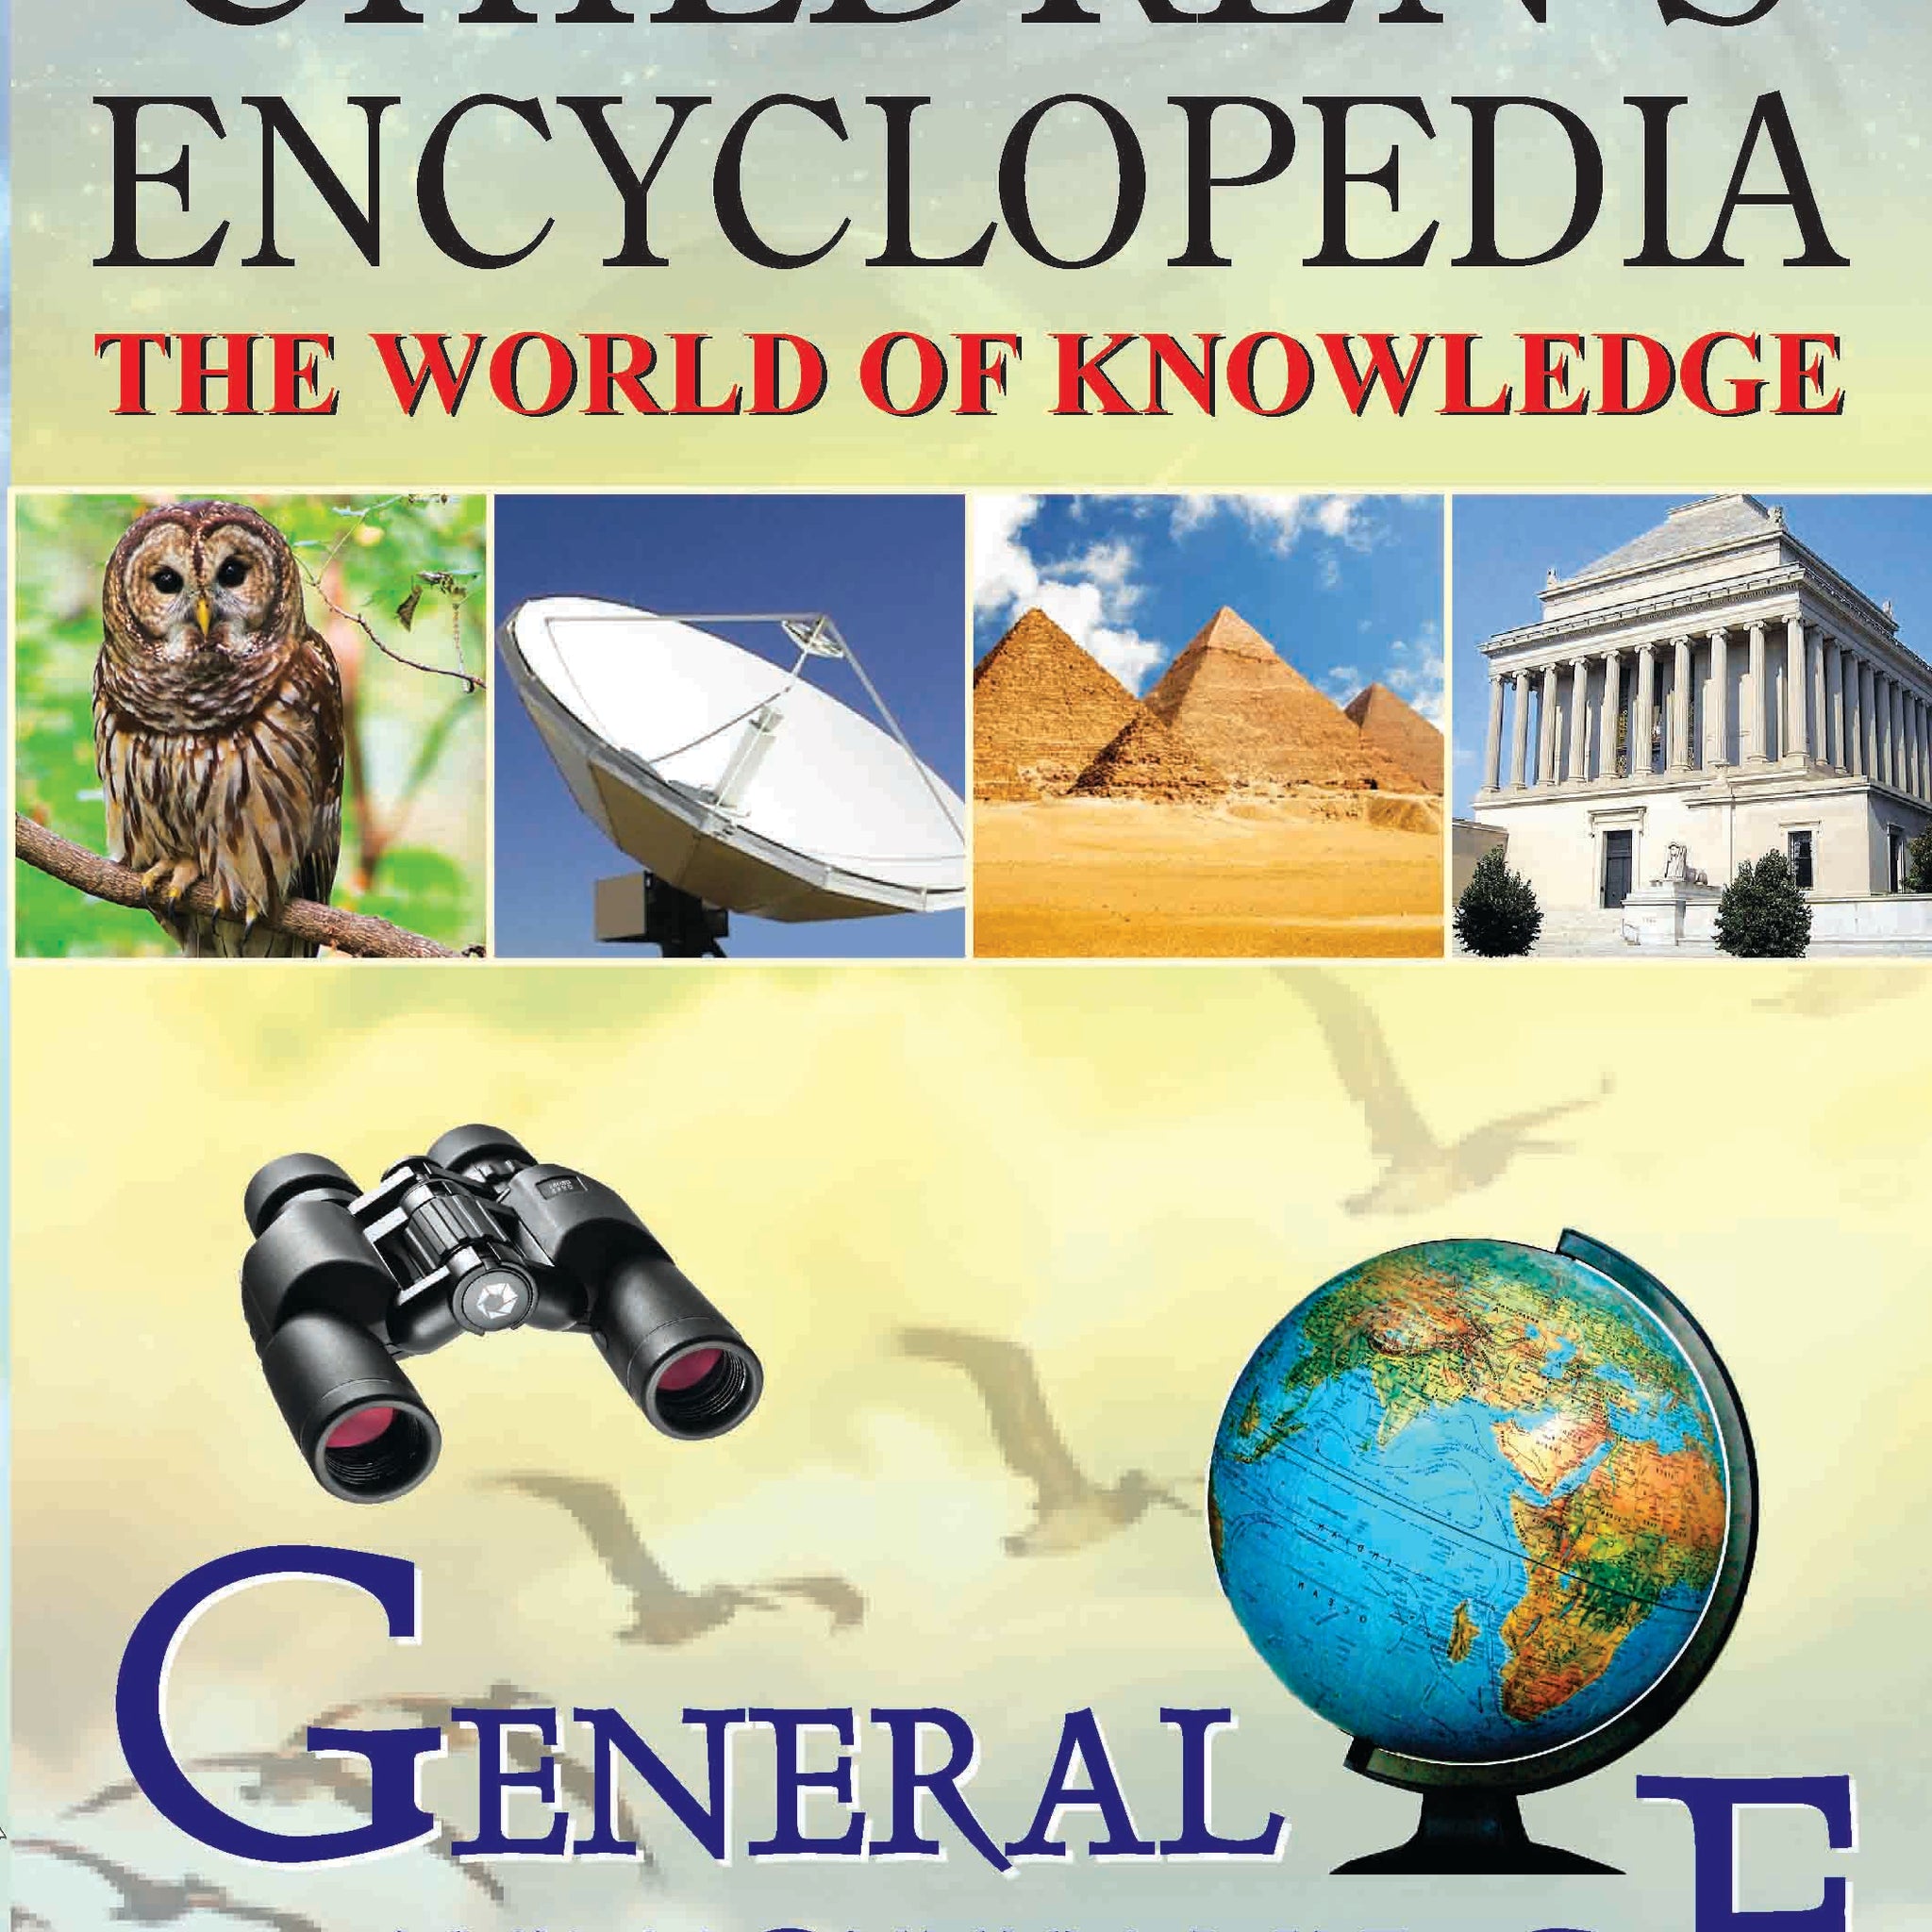 Children's Encyclopedia - General Knowledge